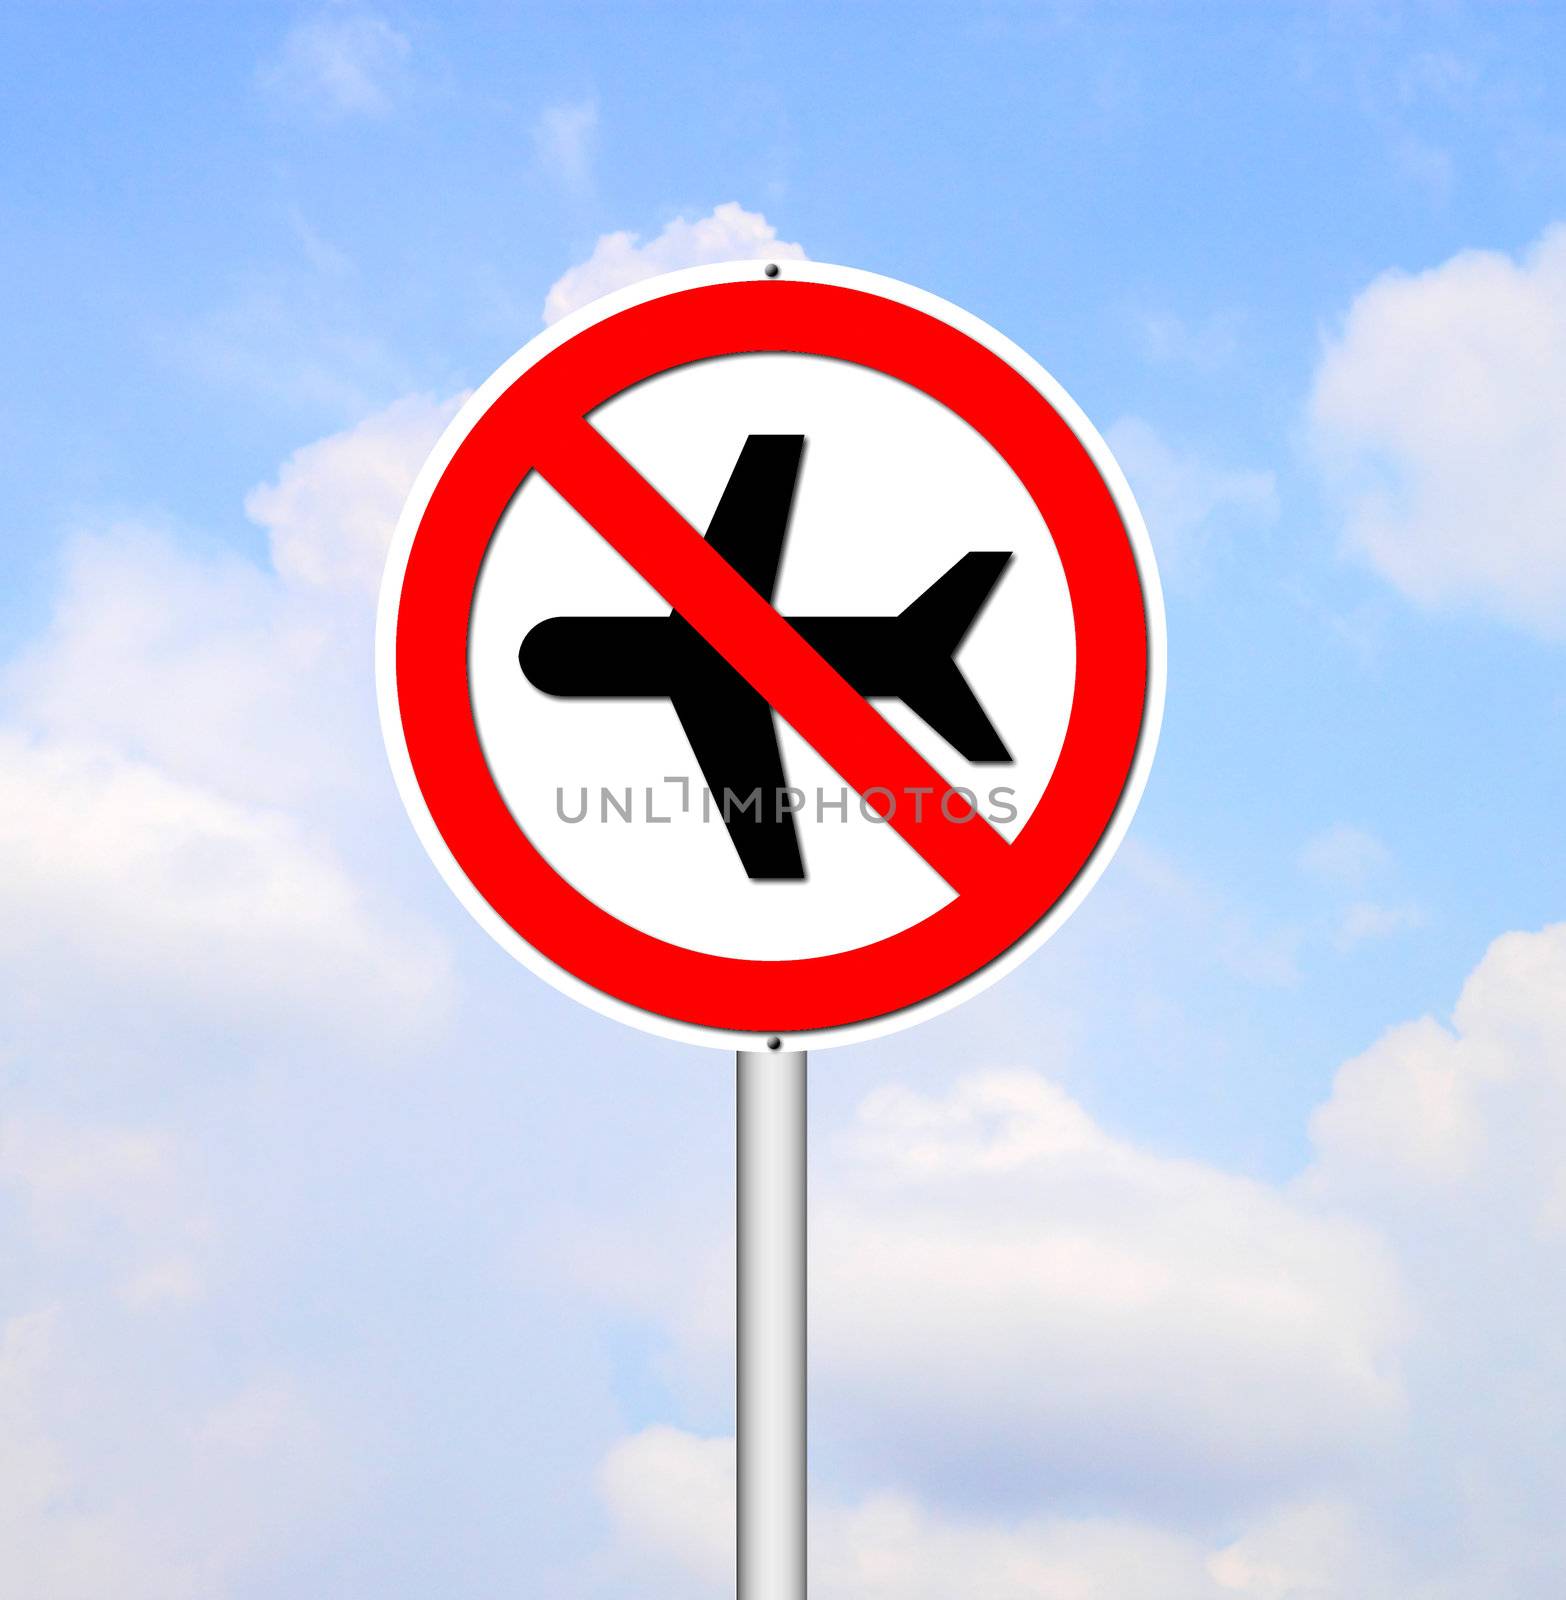 'no flying' sign on blue sky background